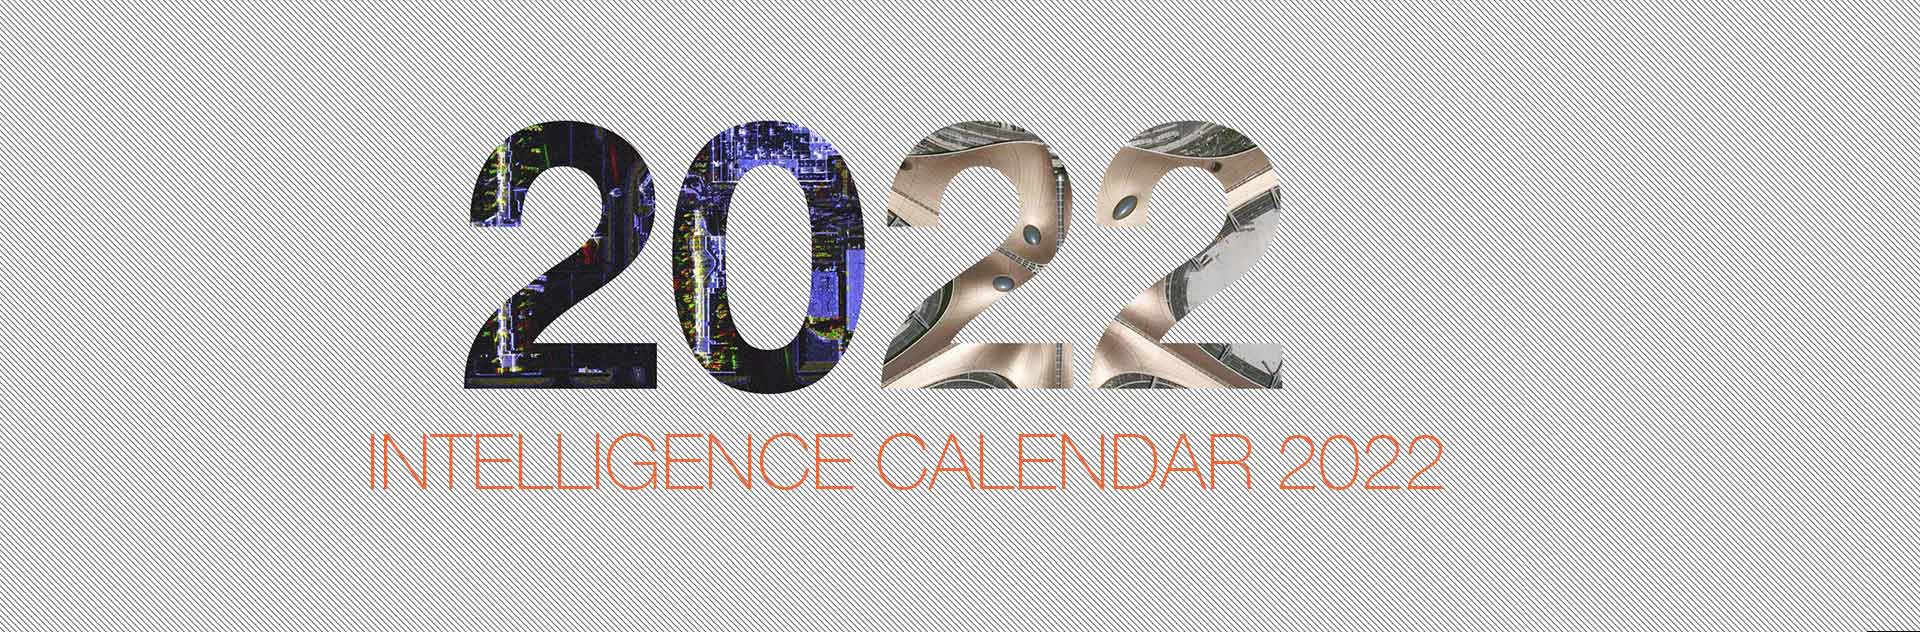 Airbus Intelligence Calendar 2022